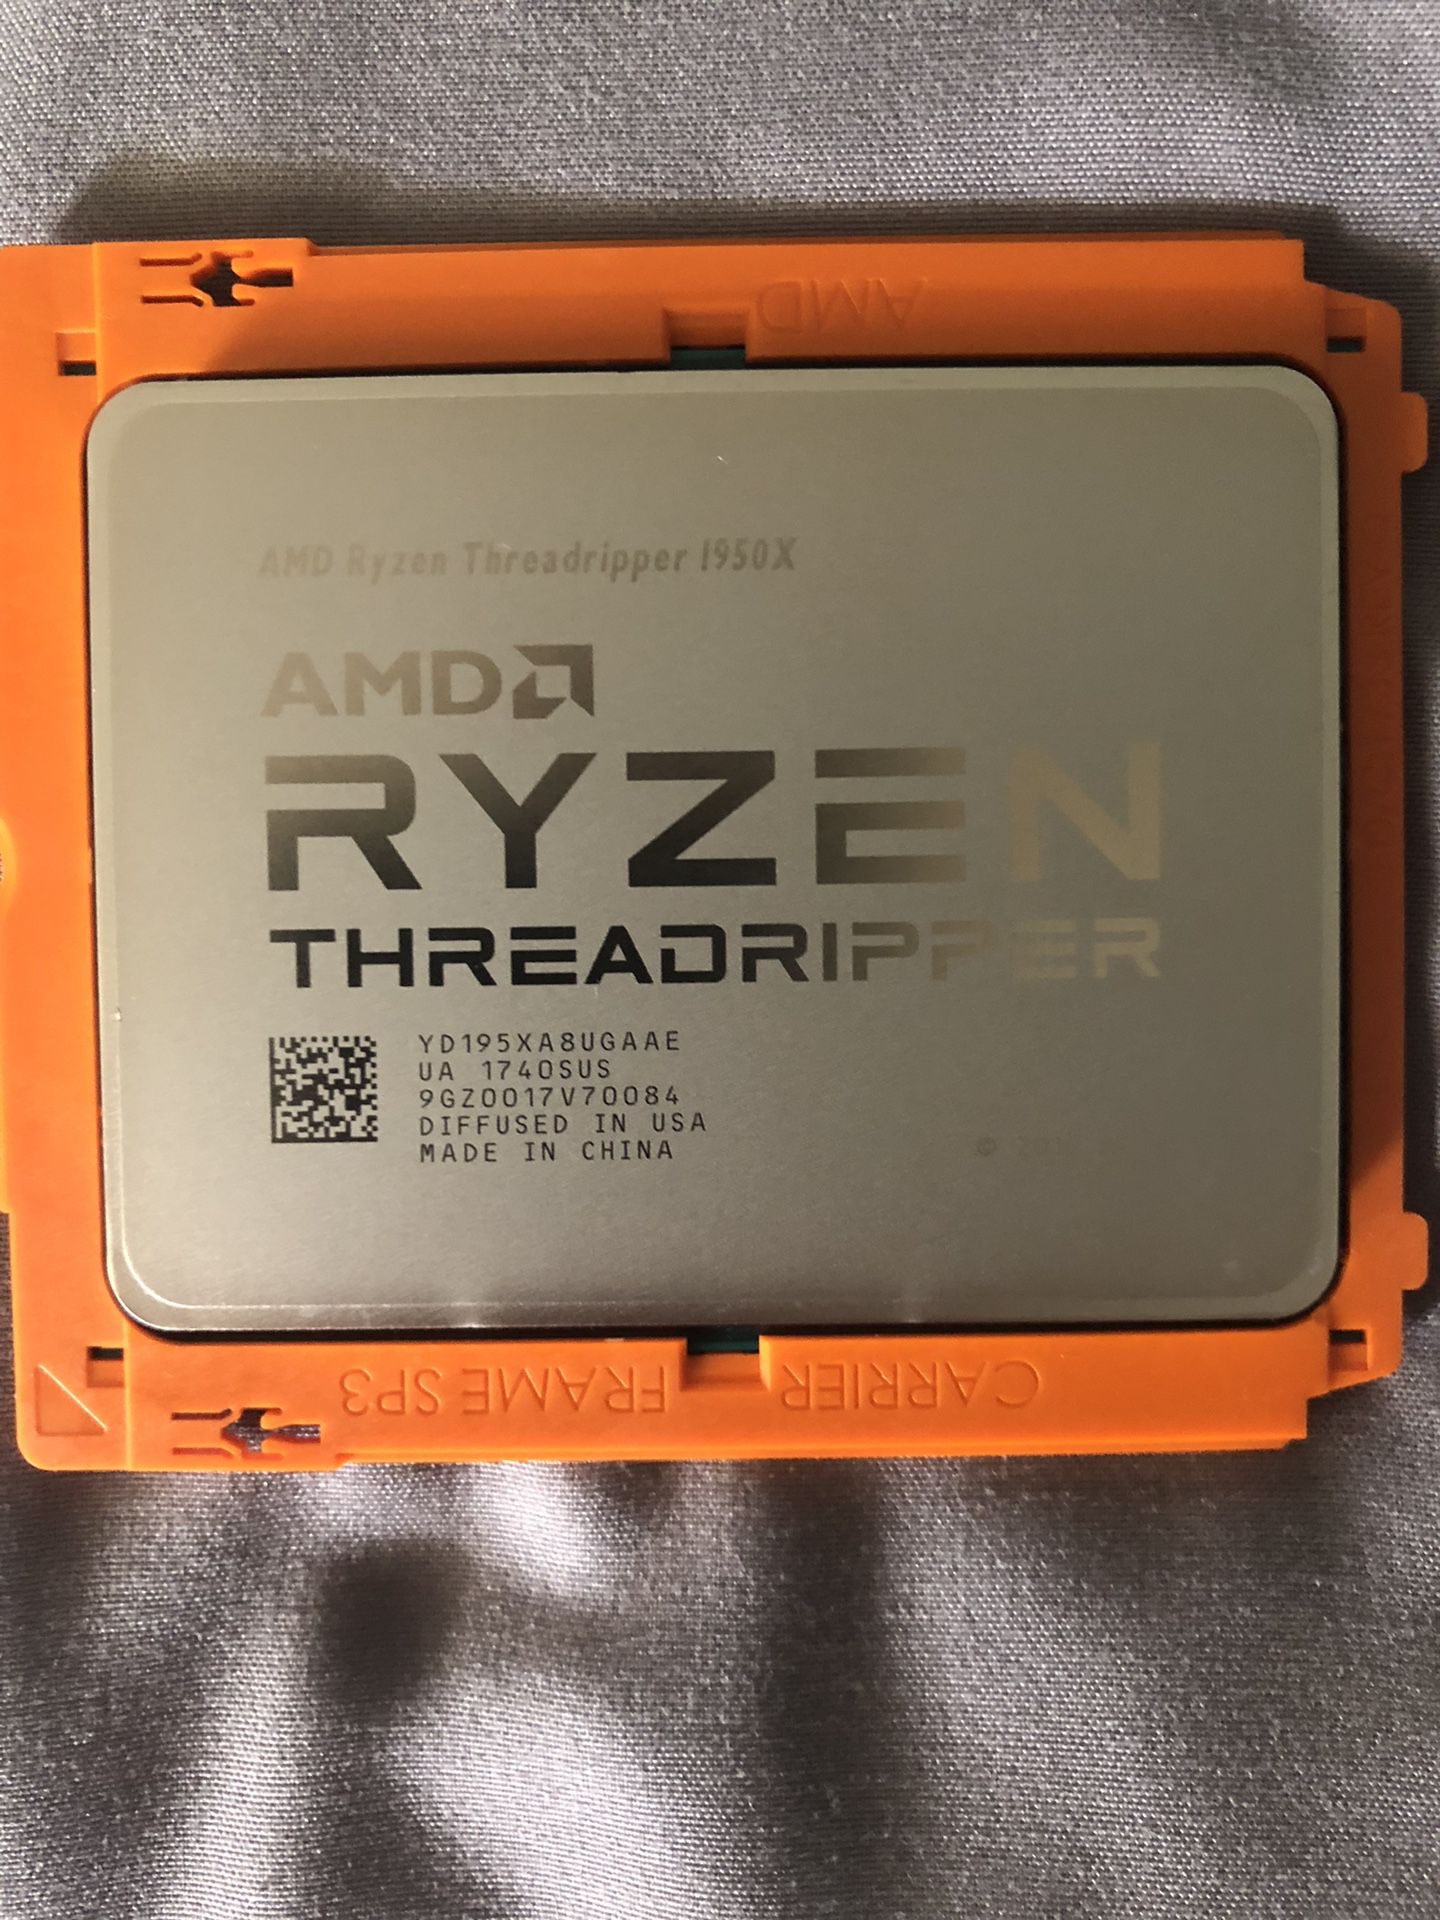 AMD ryzen threadripper x for Sale in West Covina, CA   OfferUp